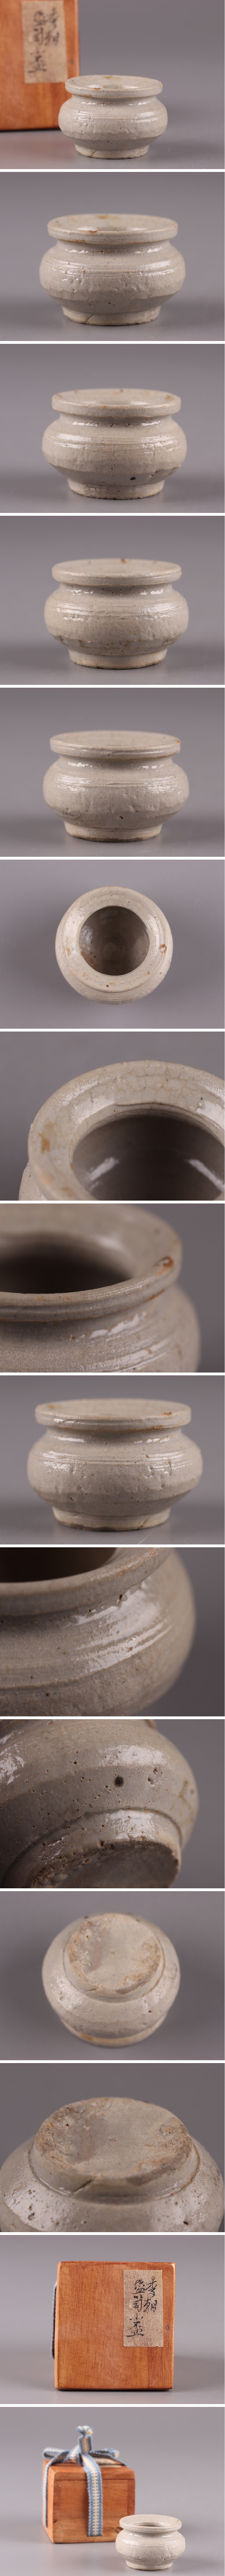 一番の古美術 朝鮮古陶磁器 李朝 白磁 小盃 時代物 極上品 初だし品 4293 李朝